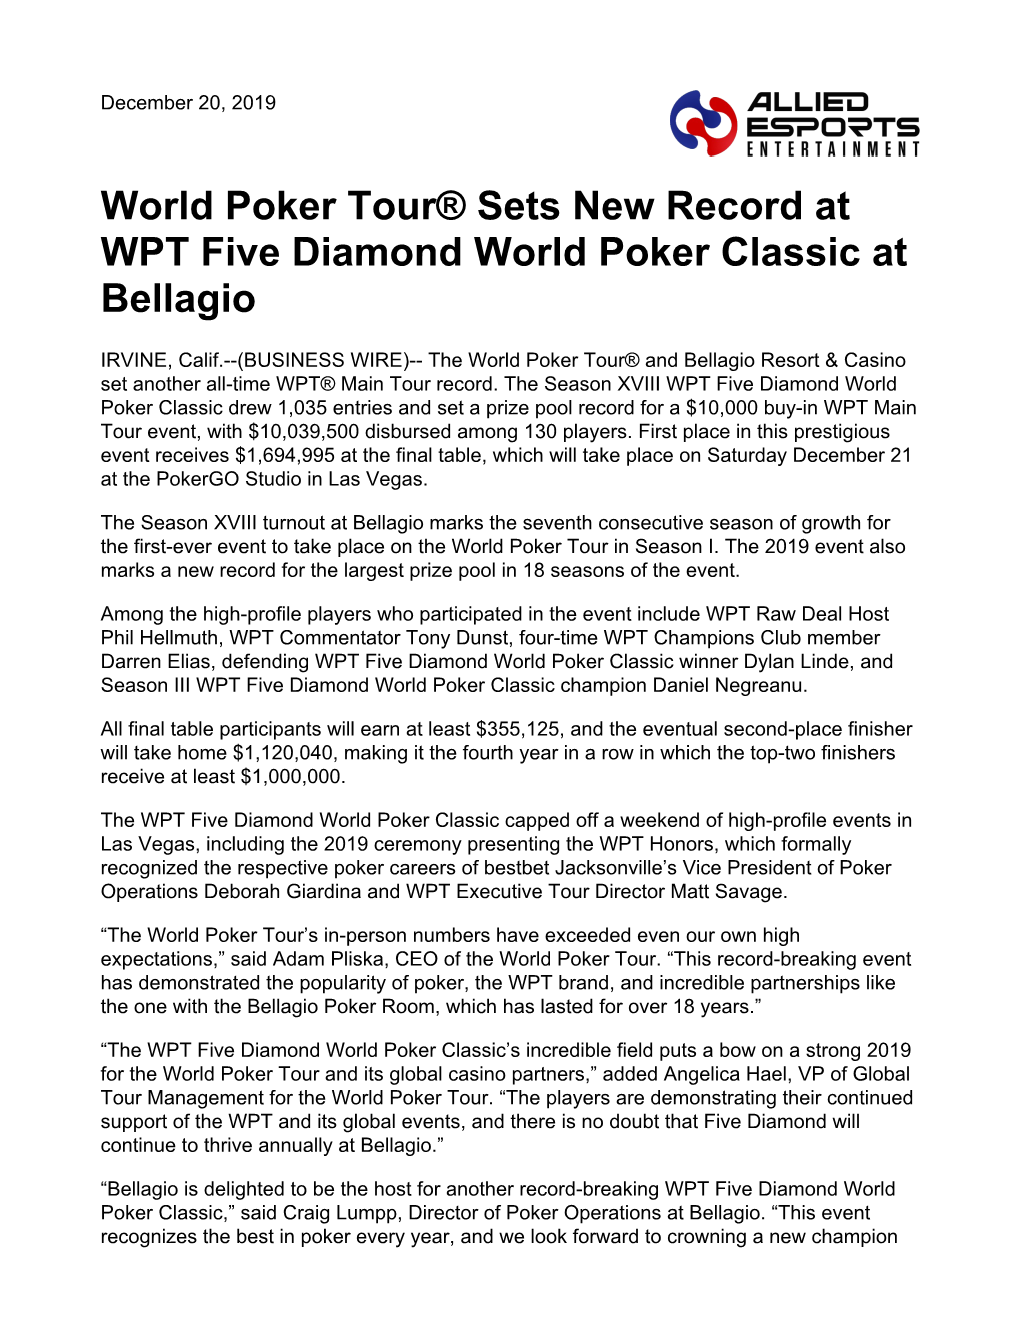 World Poker Tour® Sets New Record at WPT Five Diamond World Poker Classic at Bellagio